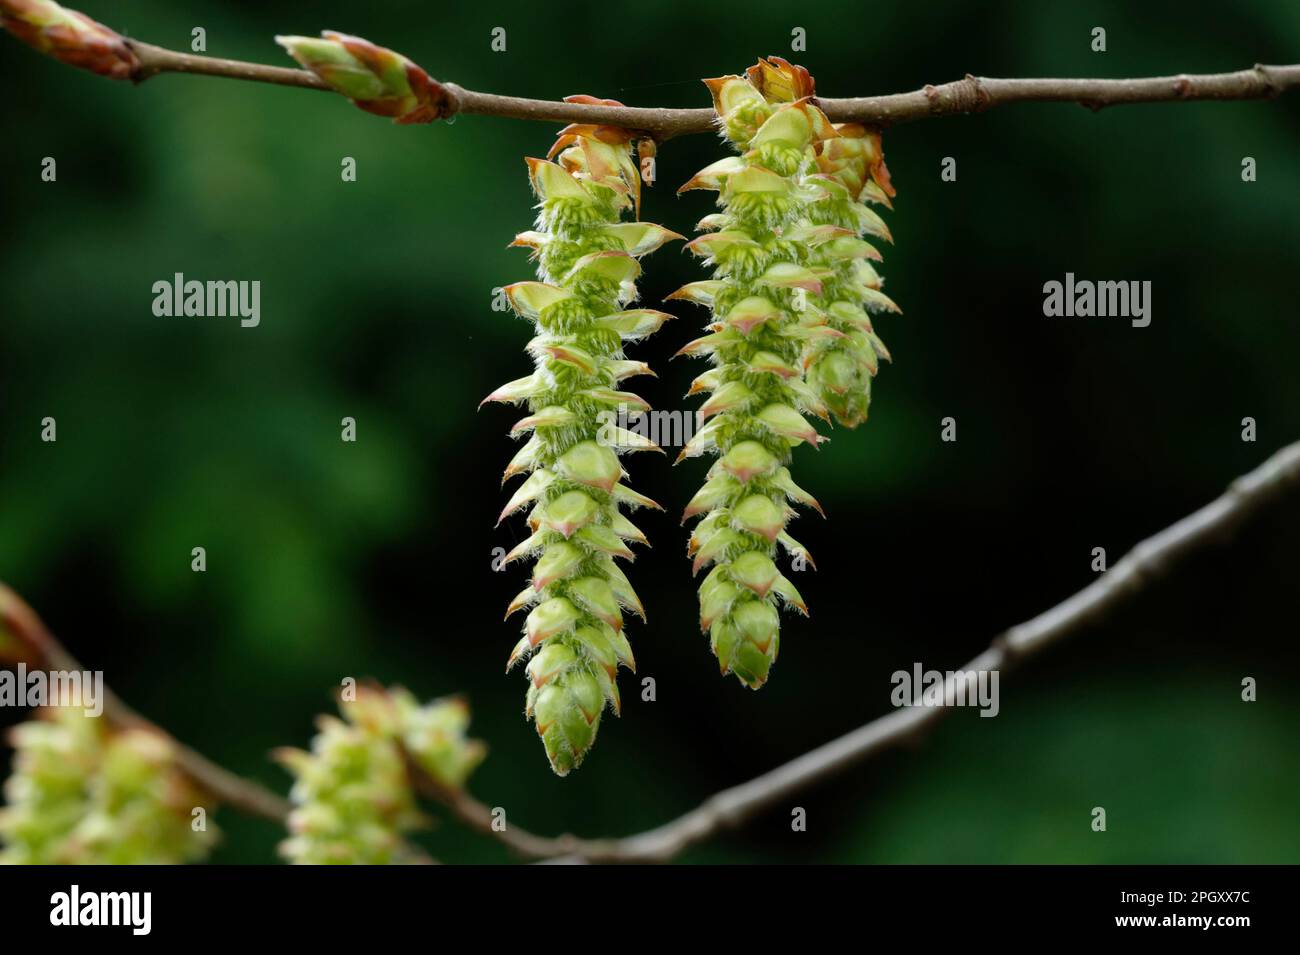 Carpinus betulus male inflorescence of a hornbeam against blurred green background Stock Photo